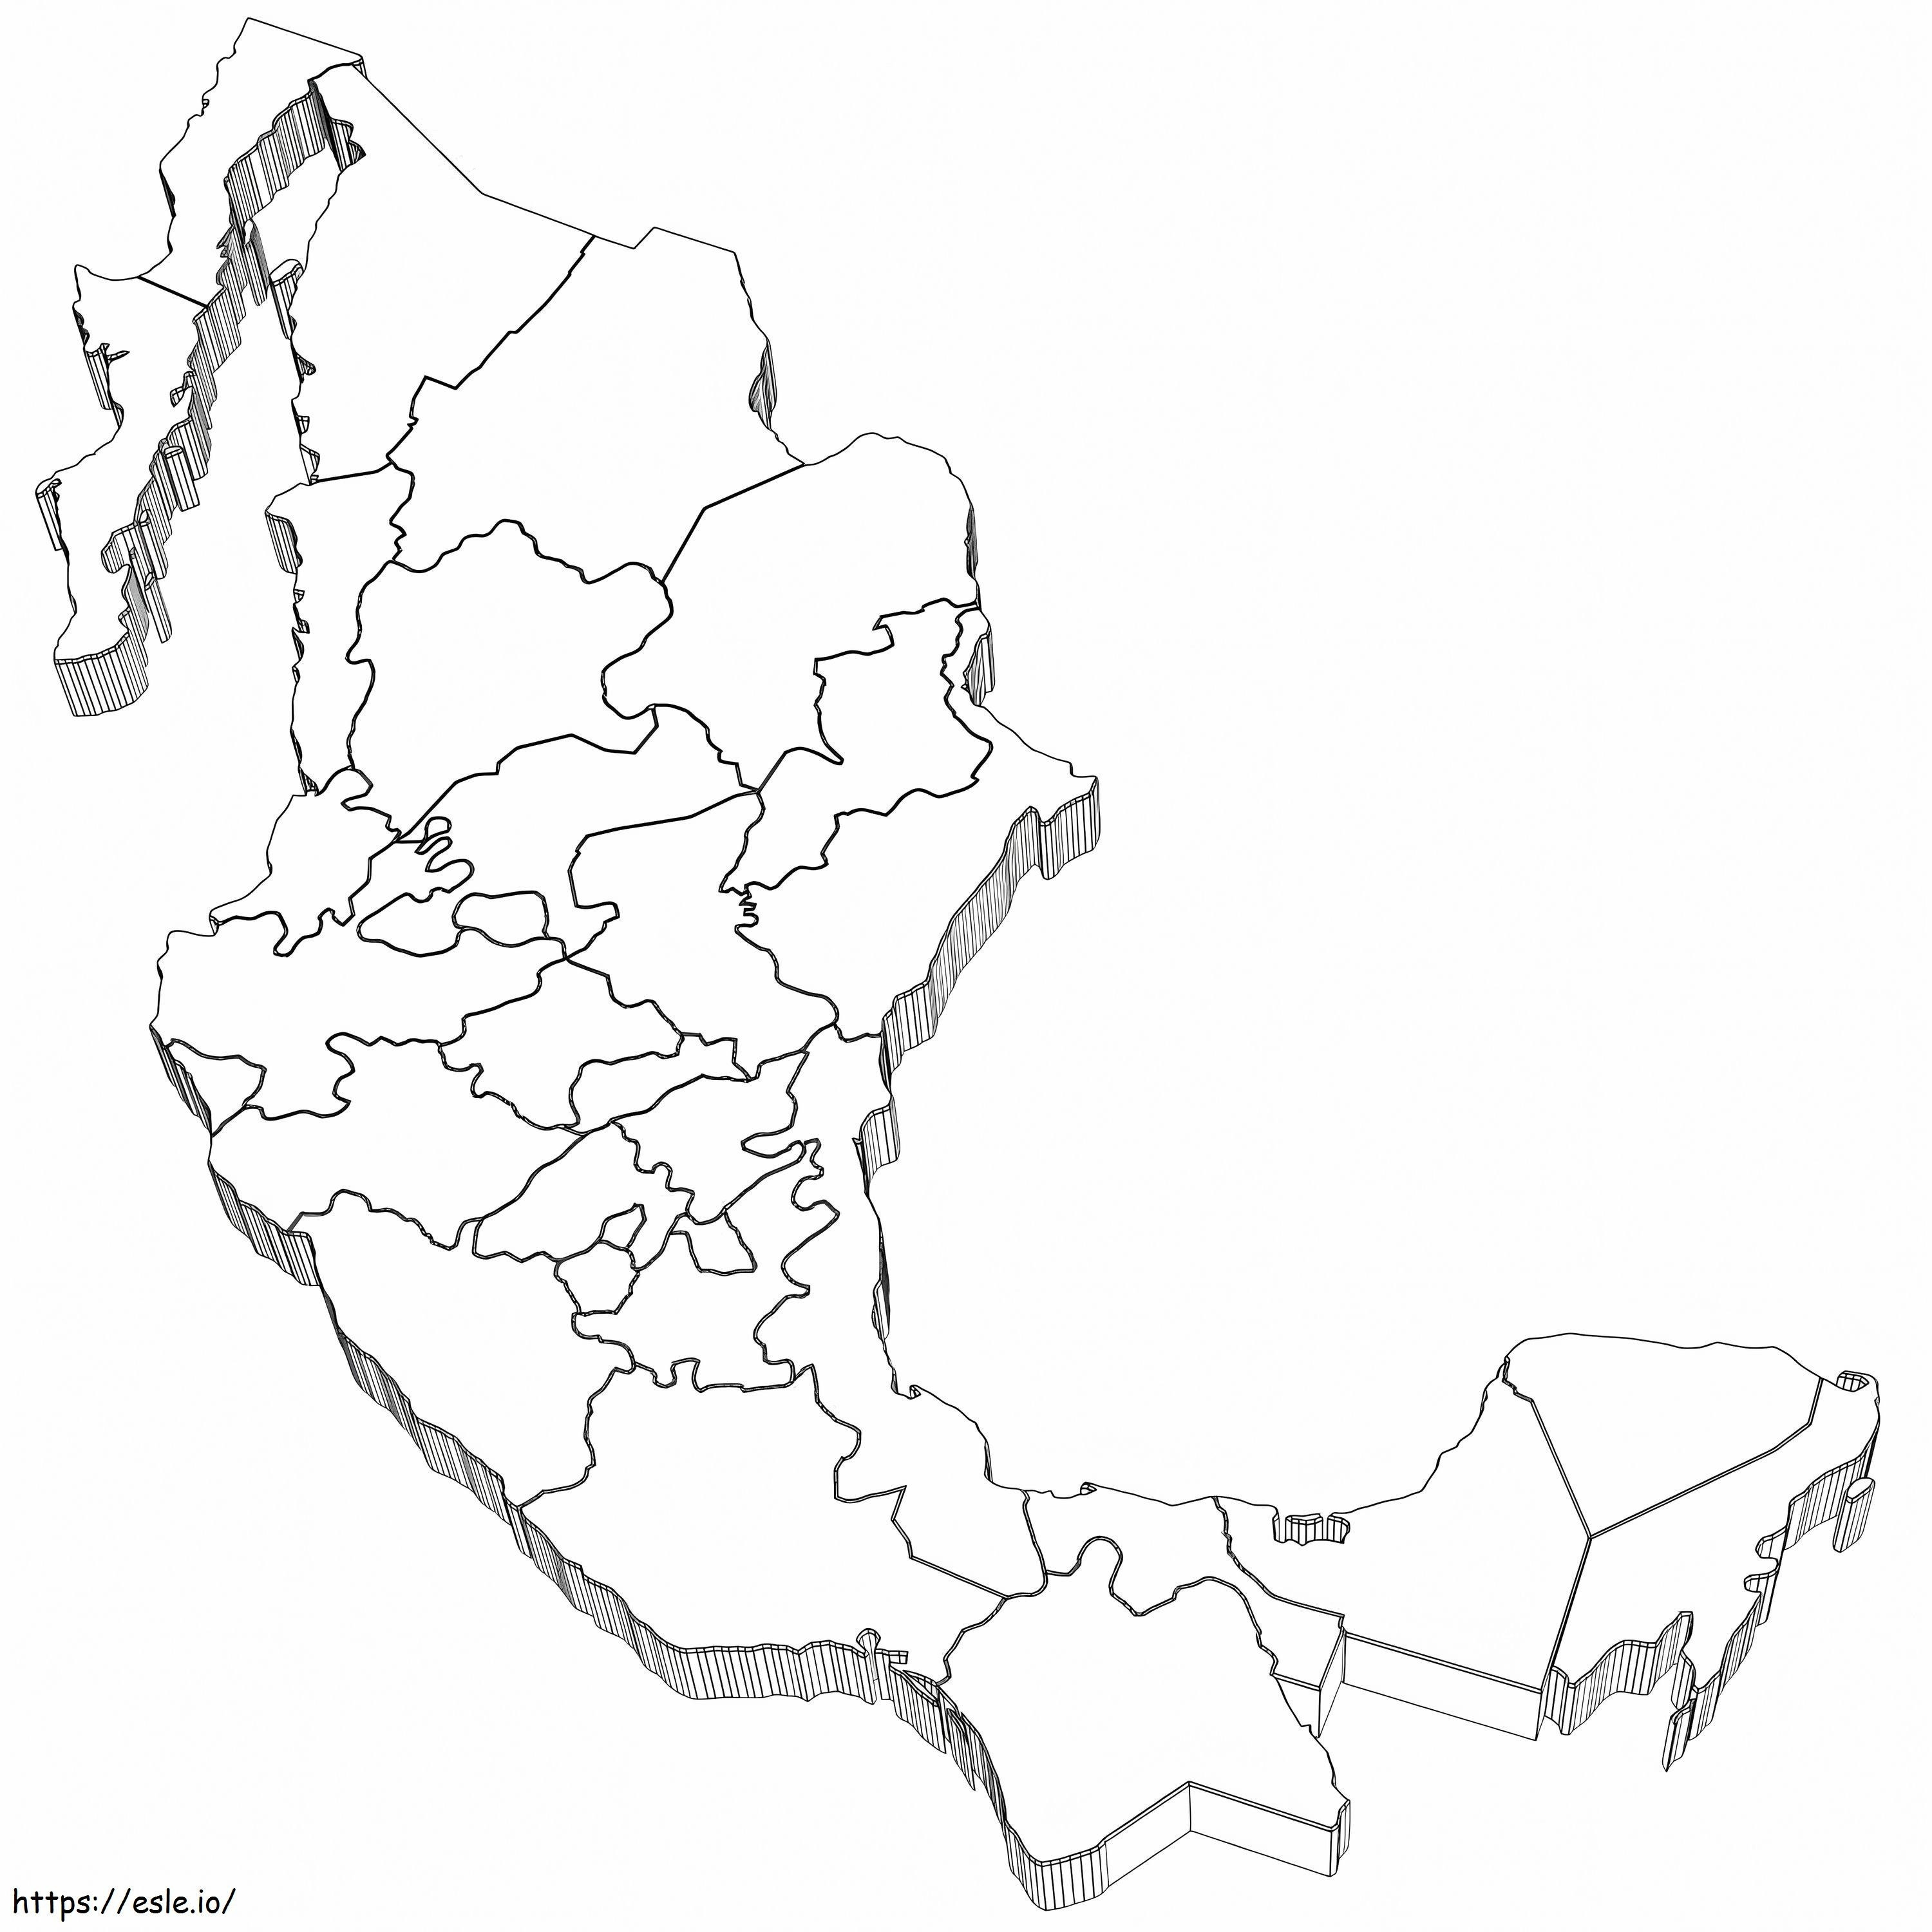 Pusta mapa Meksyku, konspekt do kolorowania kolorowanka